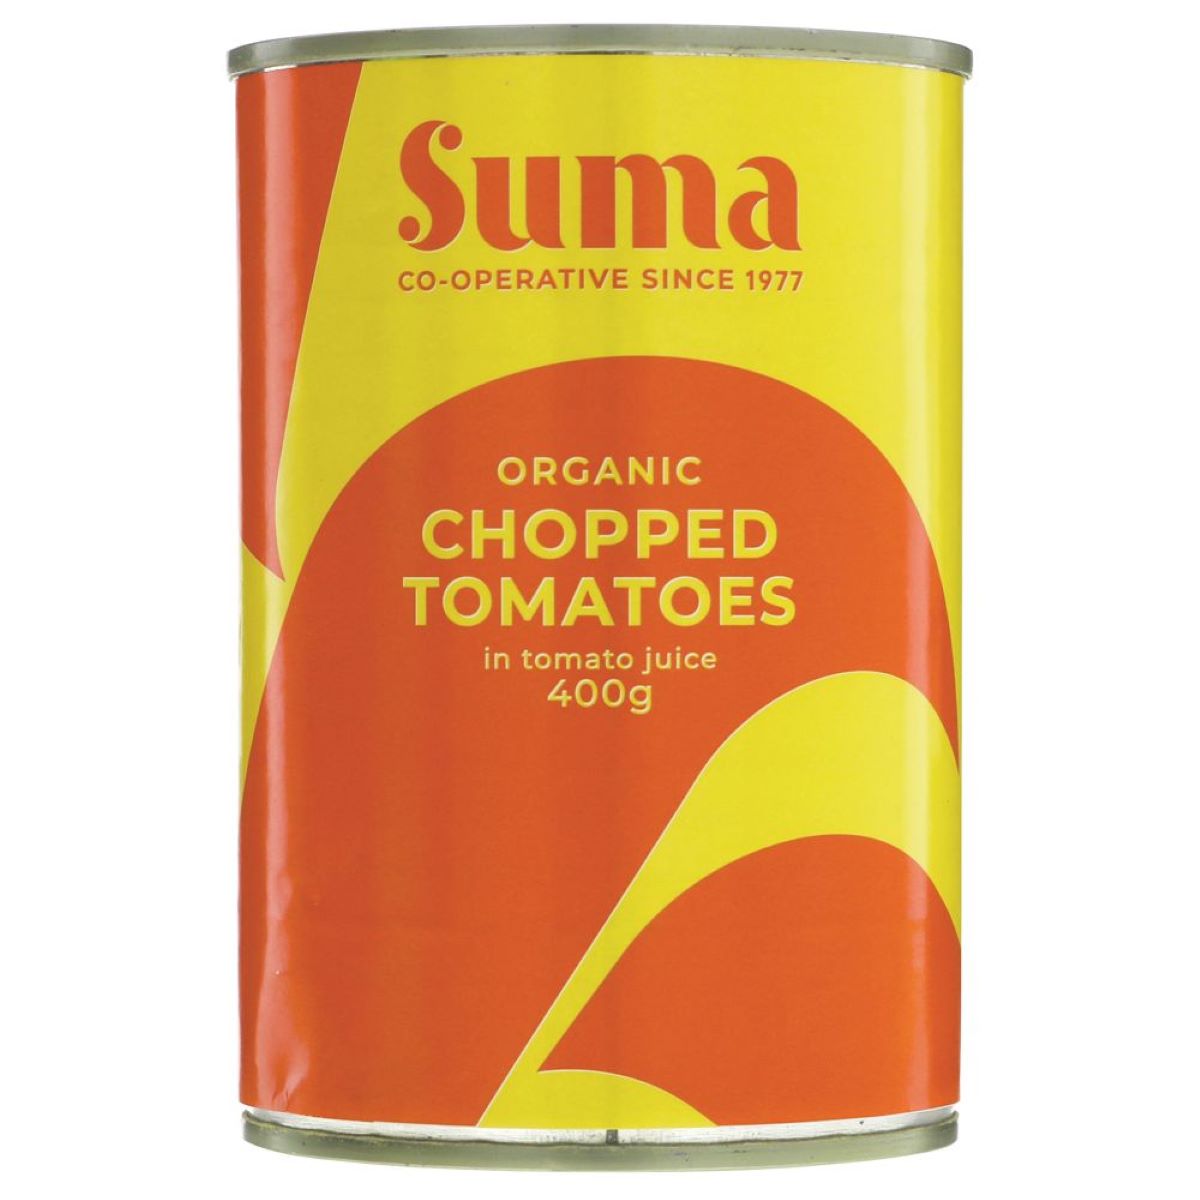 Suma Organic Chopped Tomatoes 400g